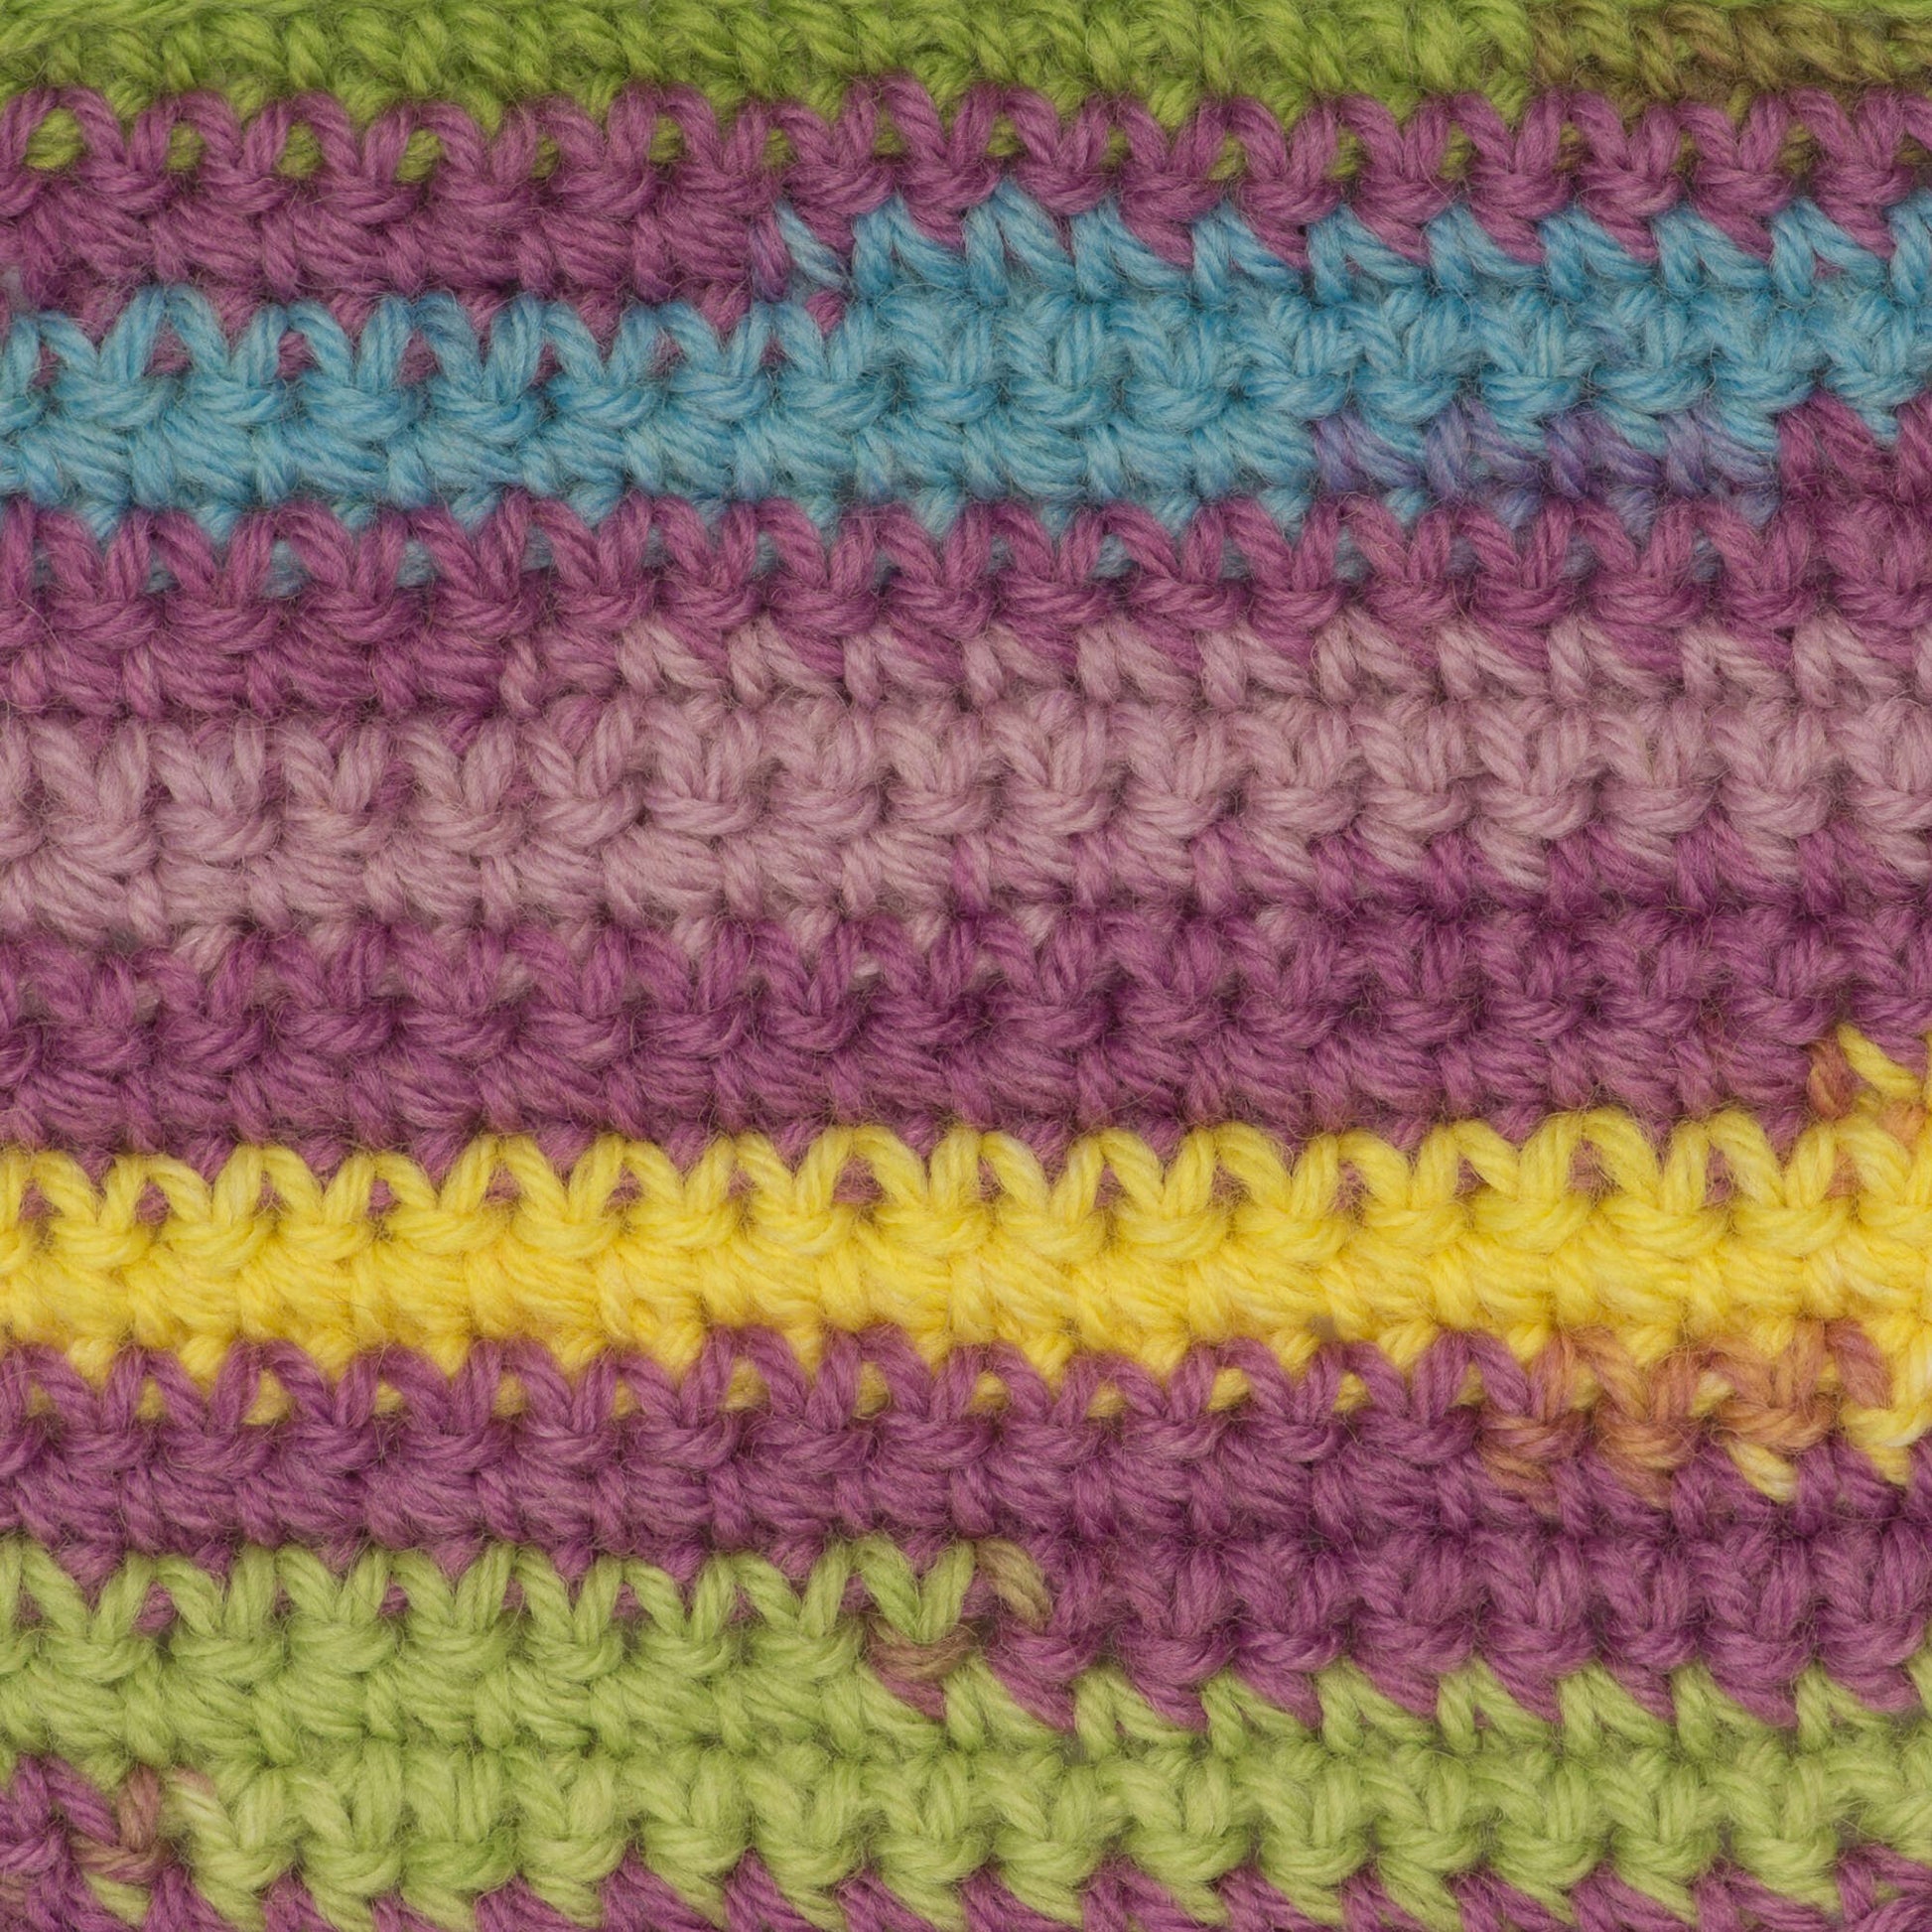 Patons Kroy Socks Yarn - Discontinued Shades Sweet Stripes